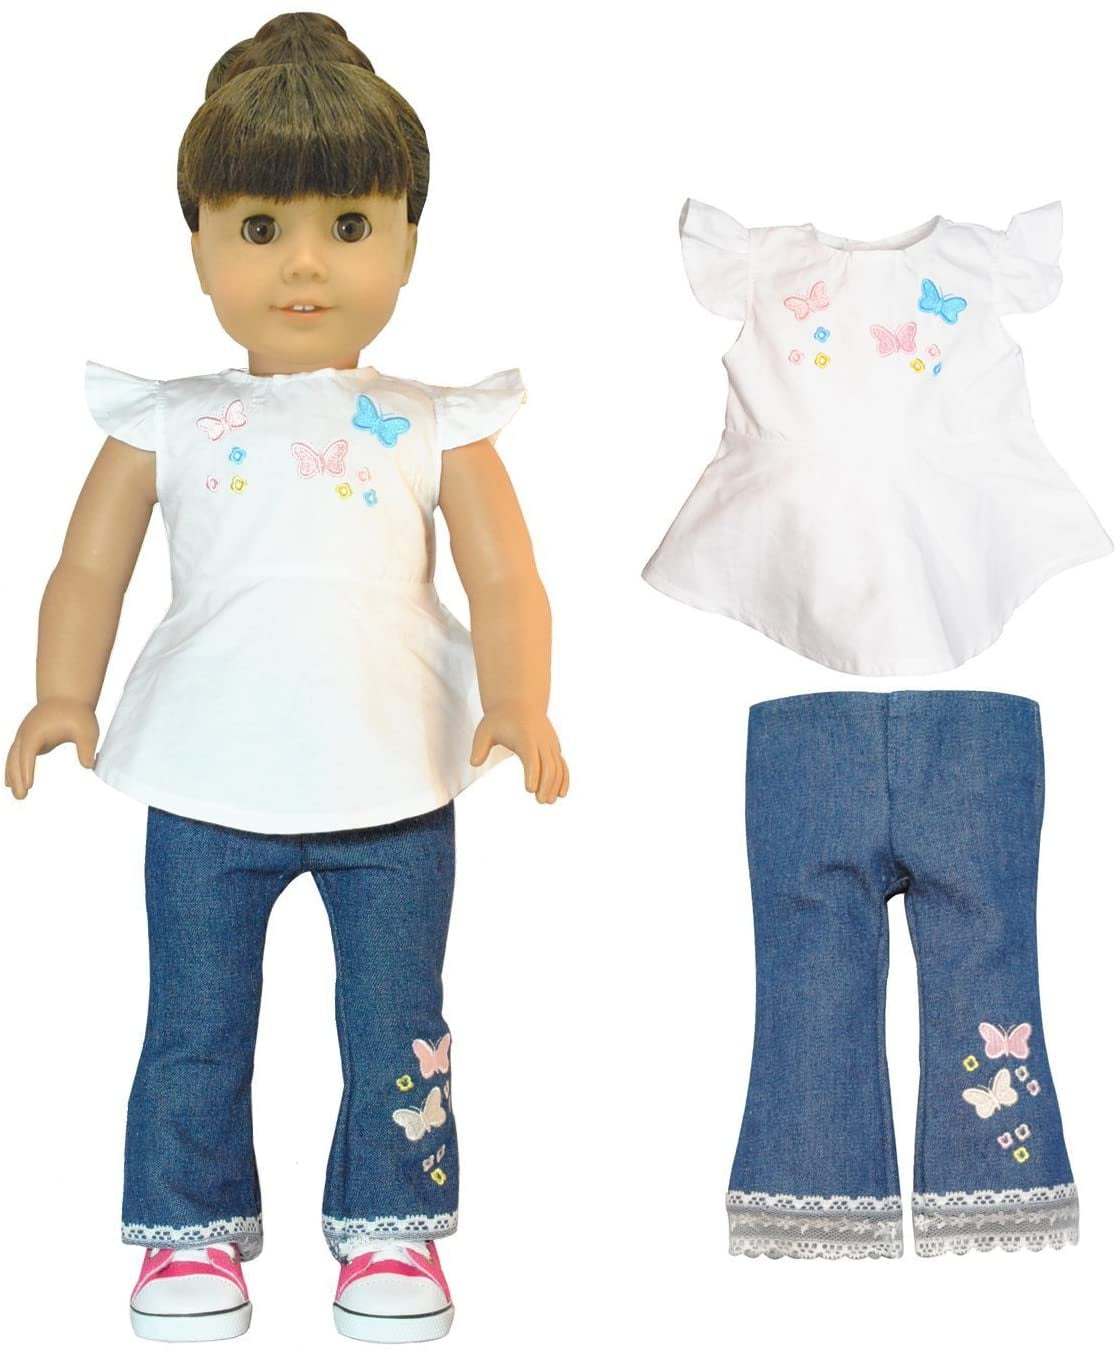 Denim Jumper w/ Pink Butterfly 3pc Set Fits 18" American Girl Doll